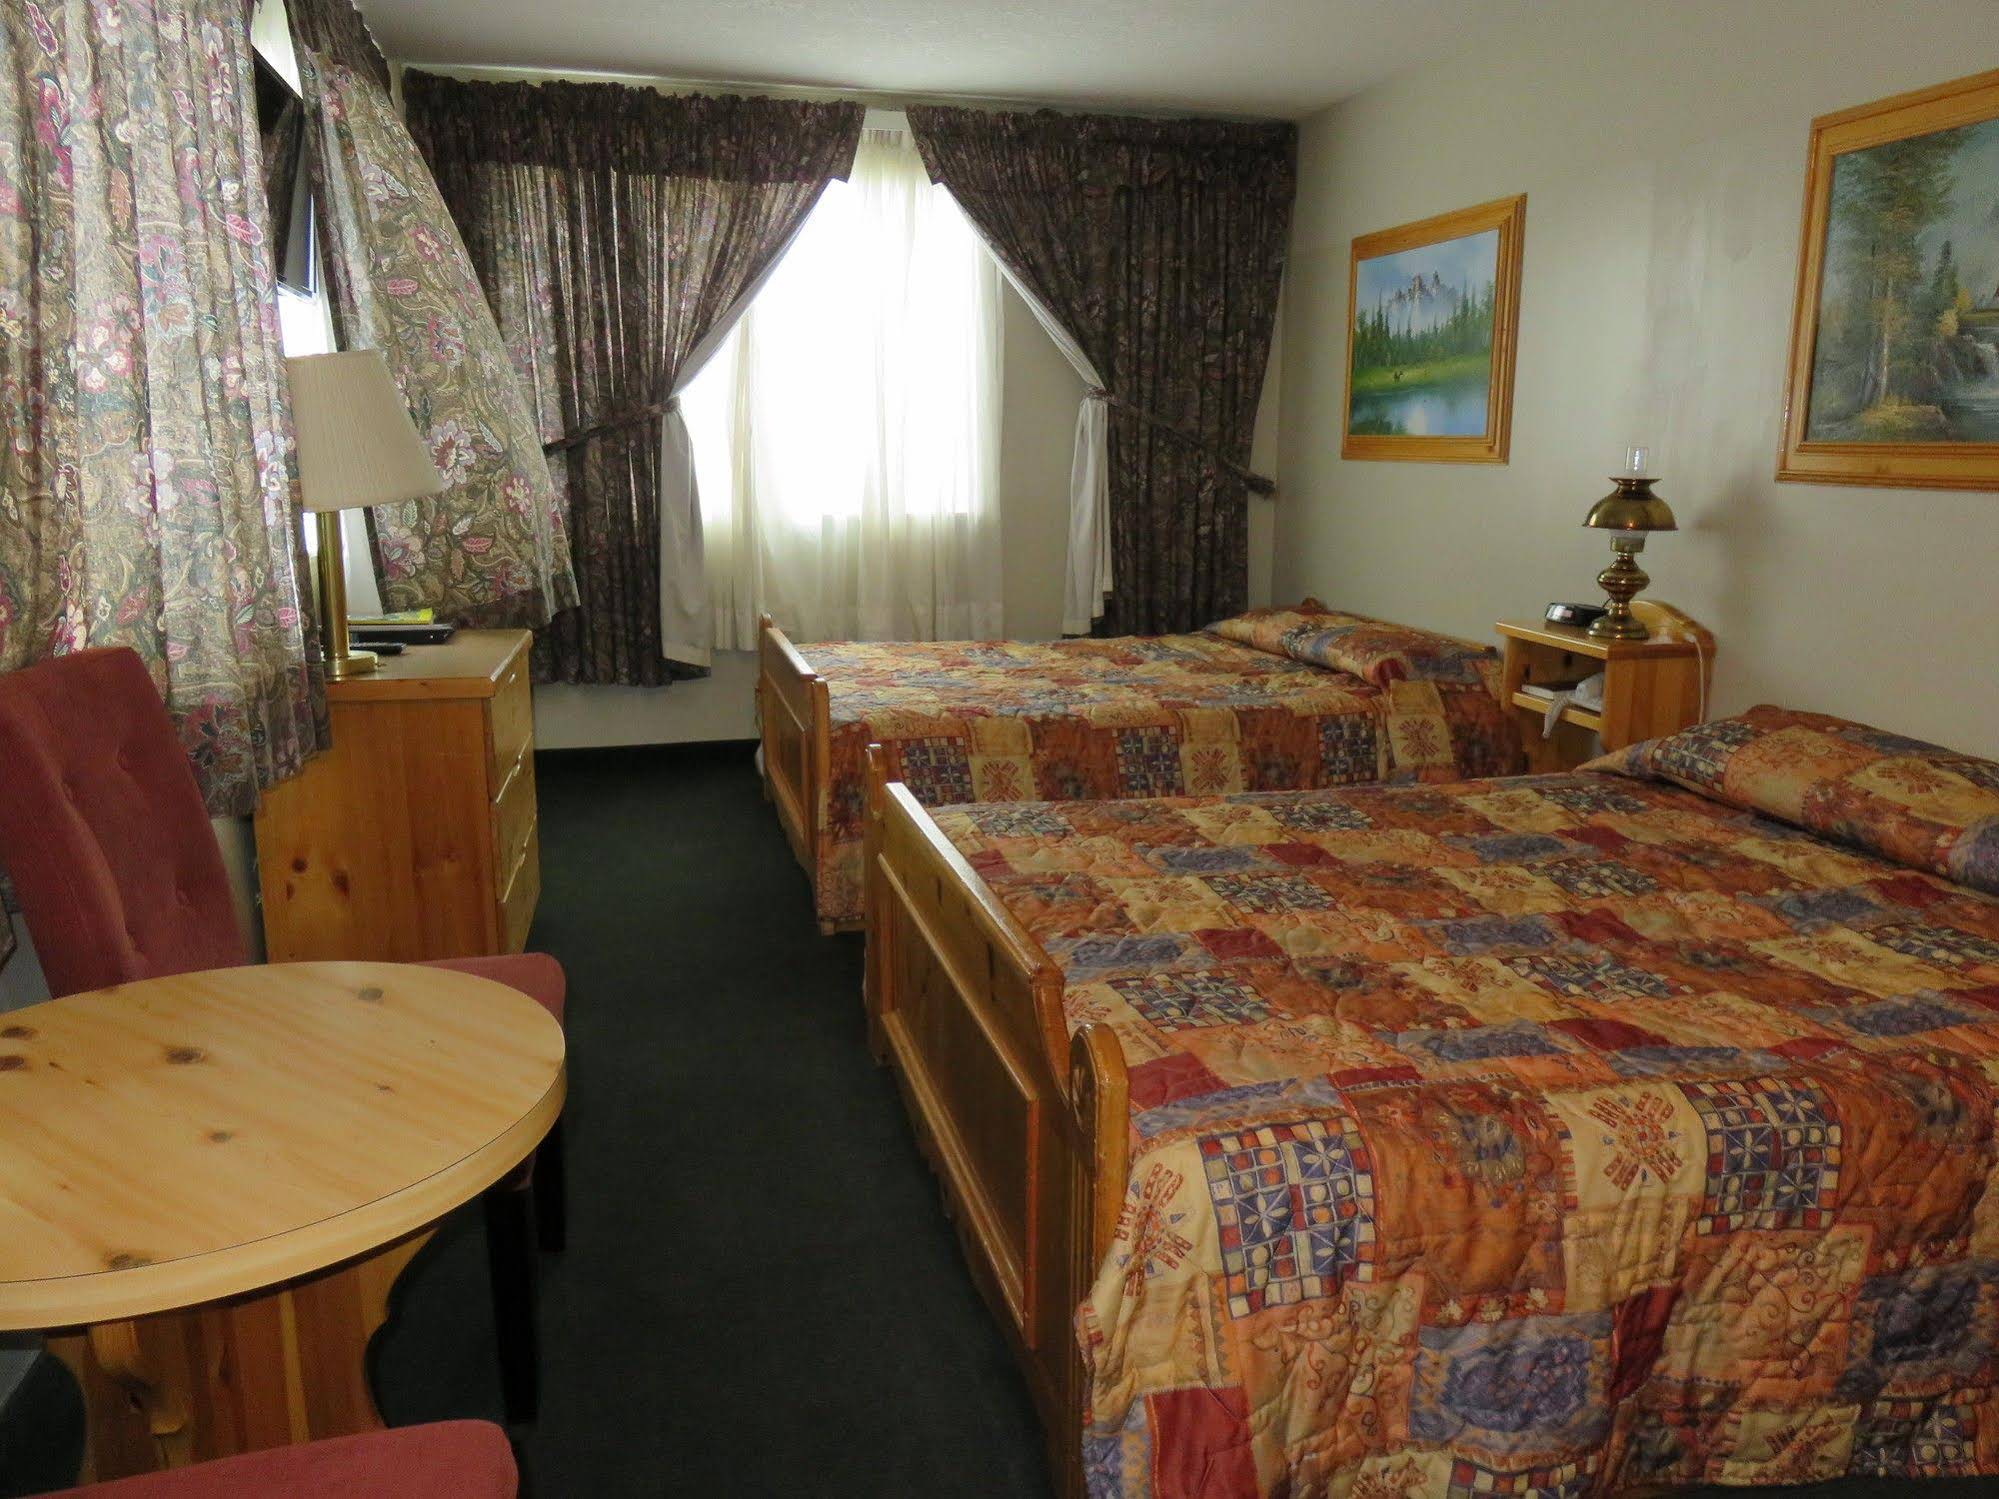 Bighorn Inn & Suites